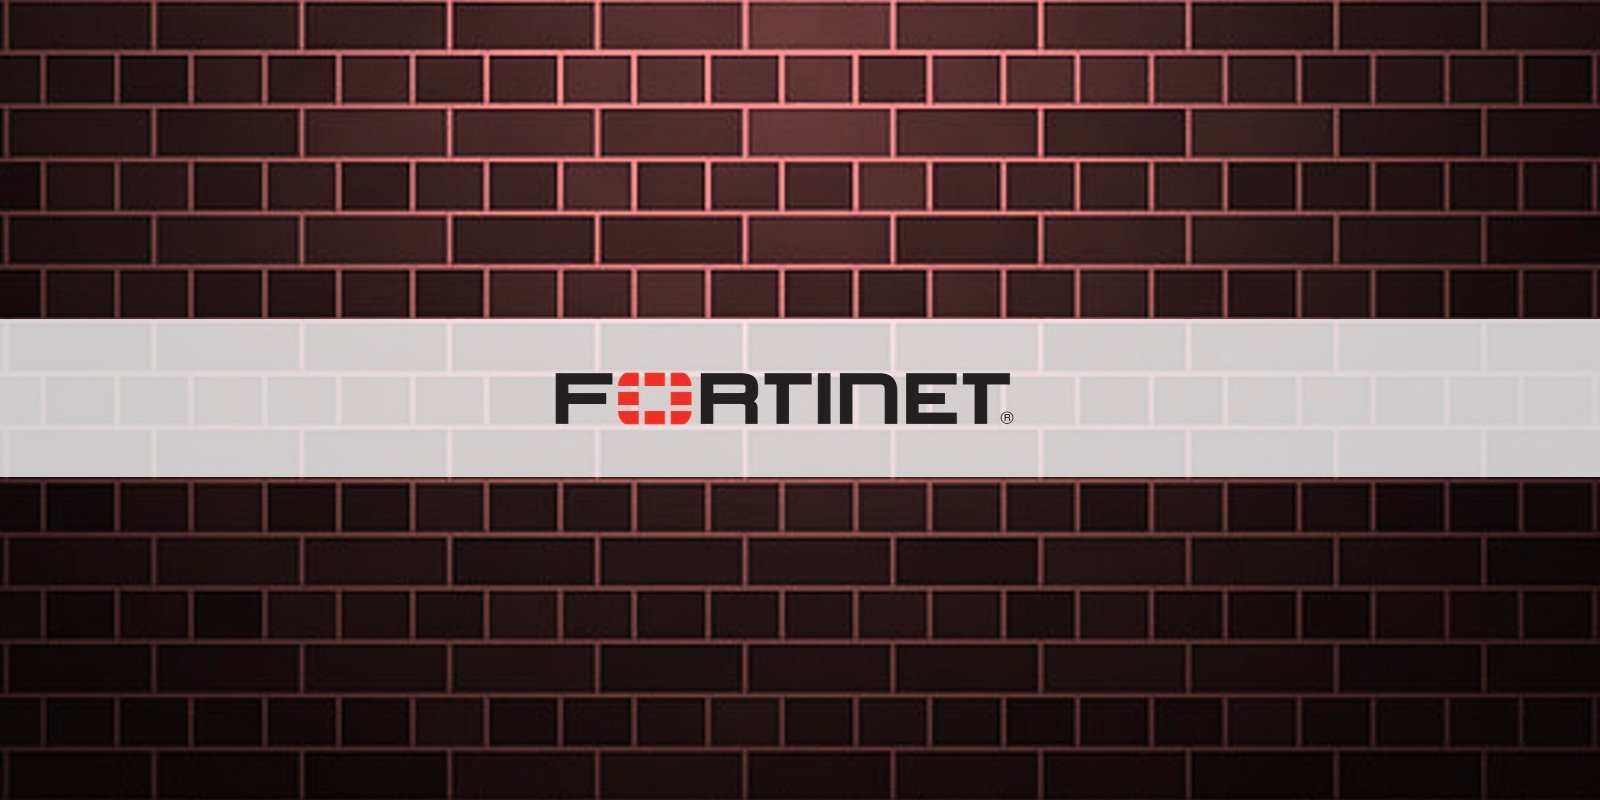 Fortinet fixes critical vulnerabilities in SSL VPN and web firewall